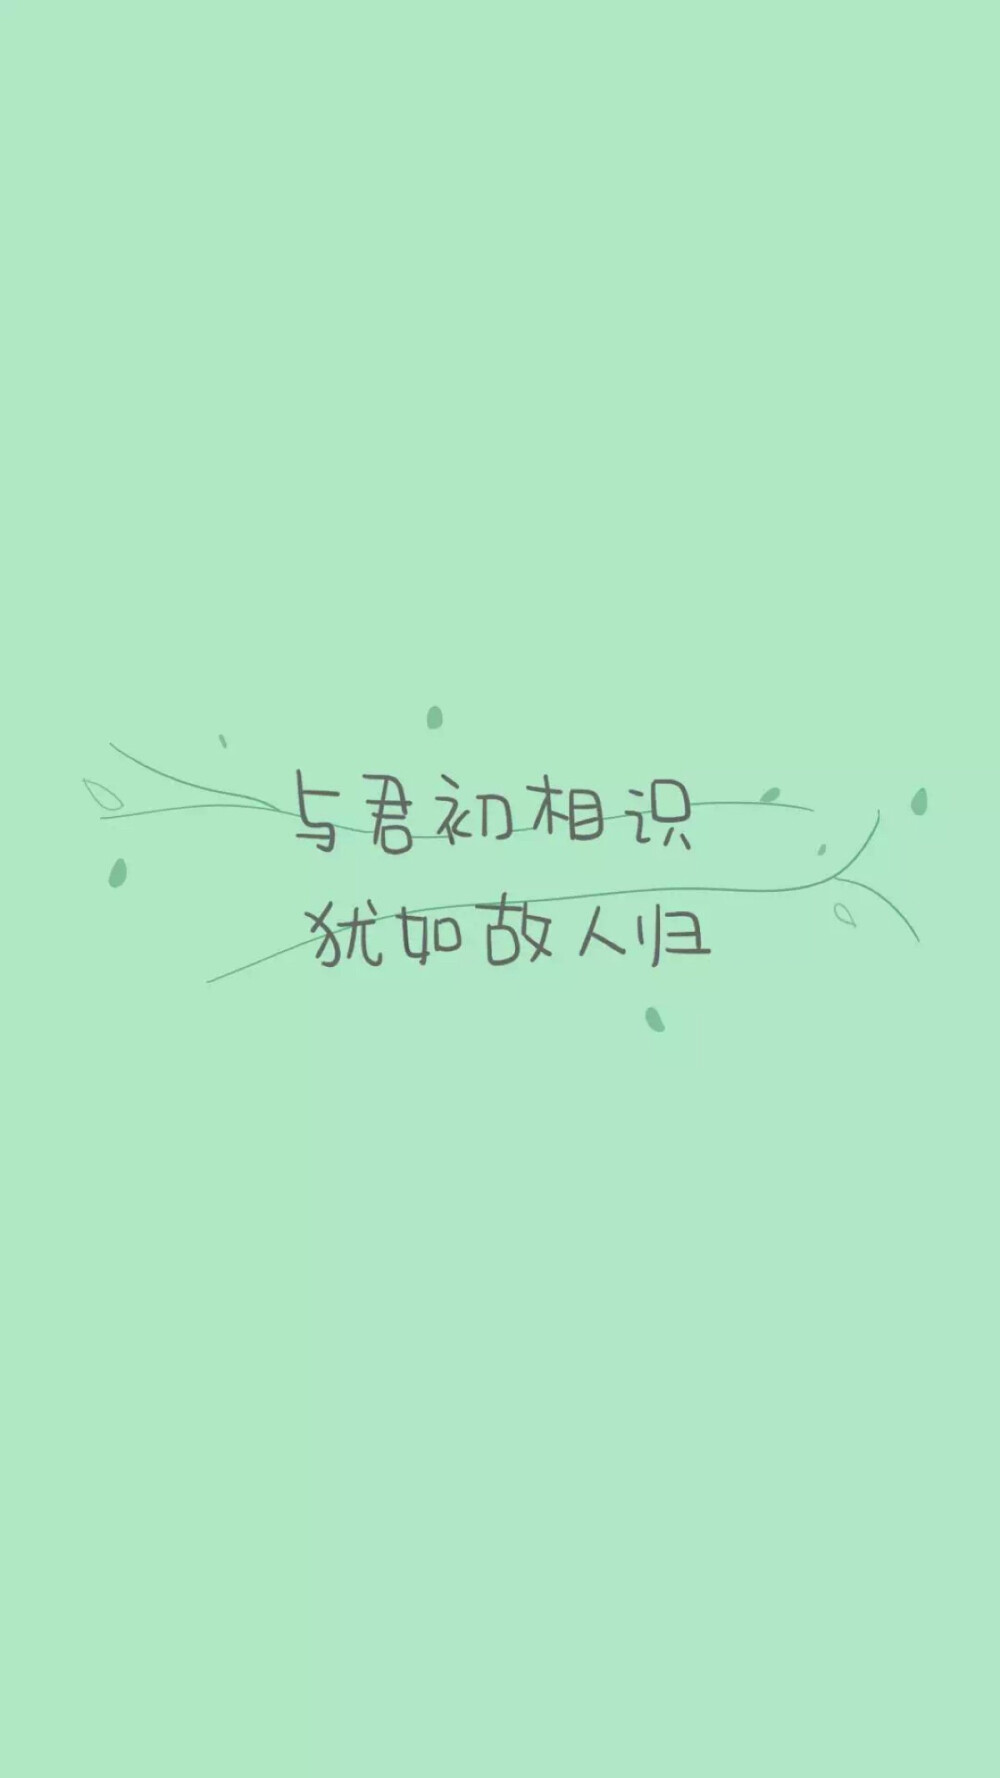  from晚安荼蘼 手写句子 文字壁纸 锁屏 情话 古风